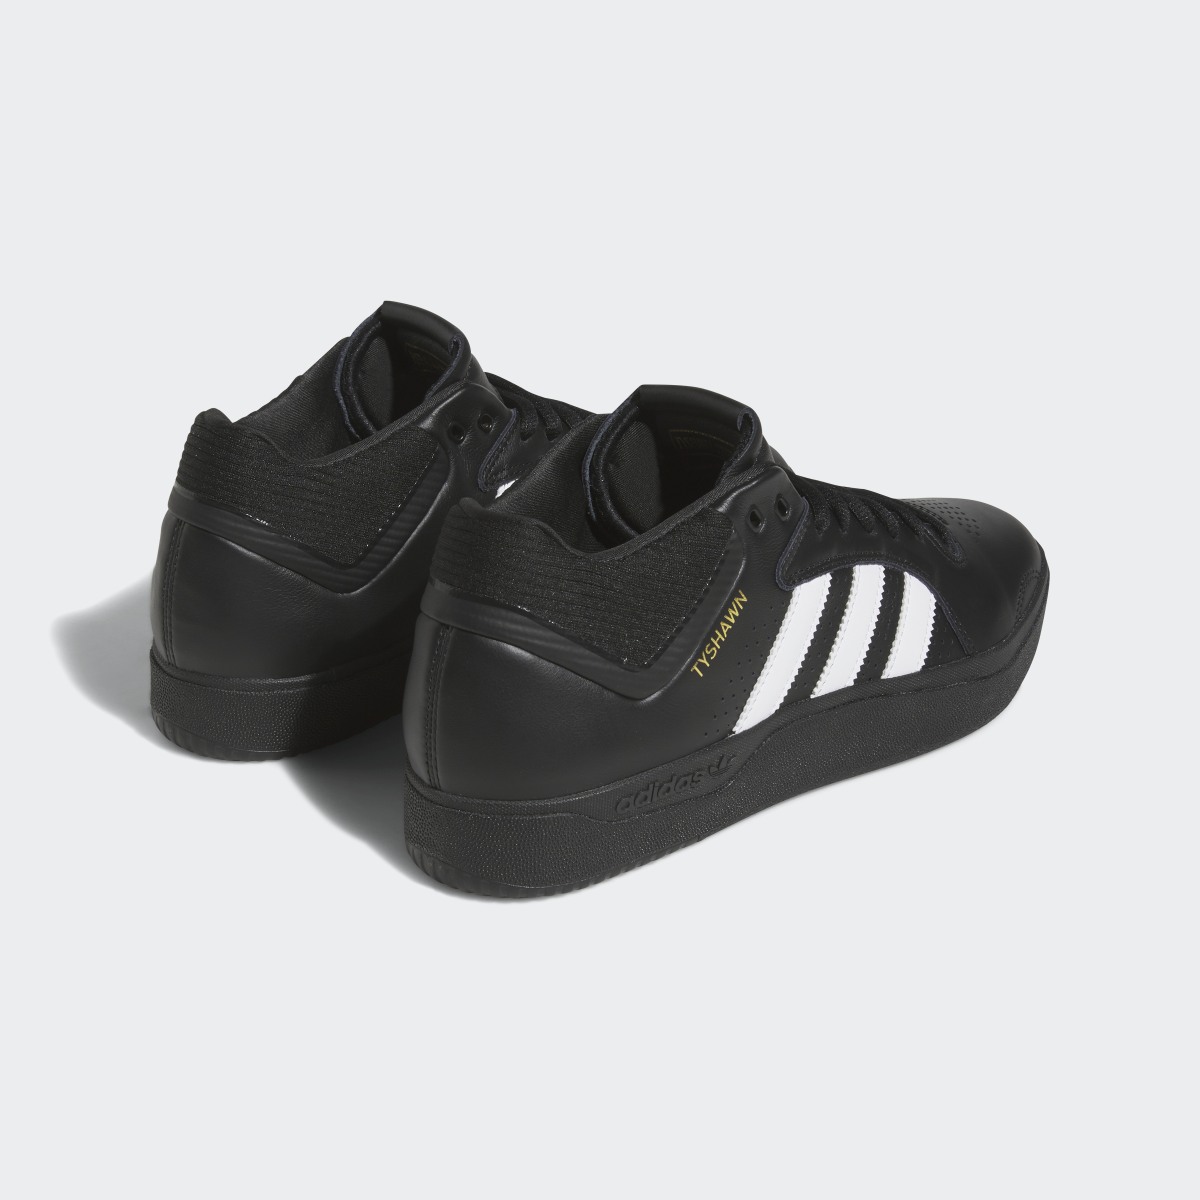 Adidas Tyshawn Remastered Shoes. 6